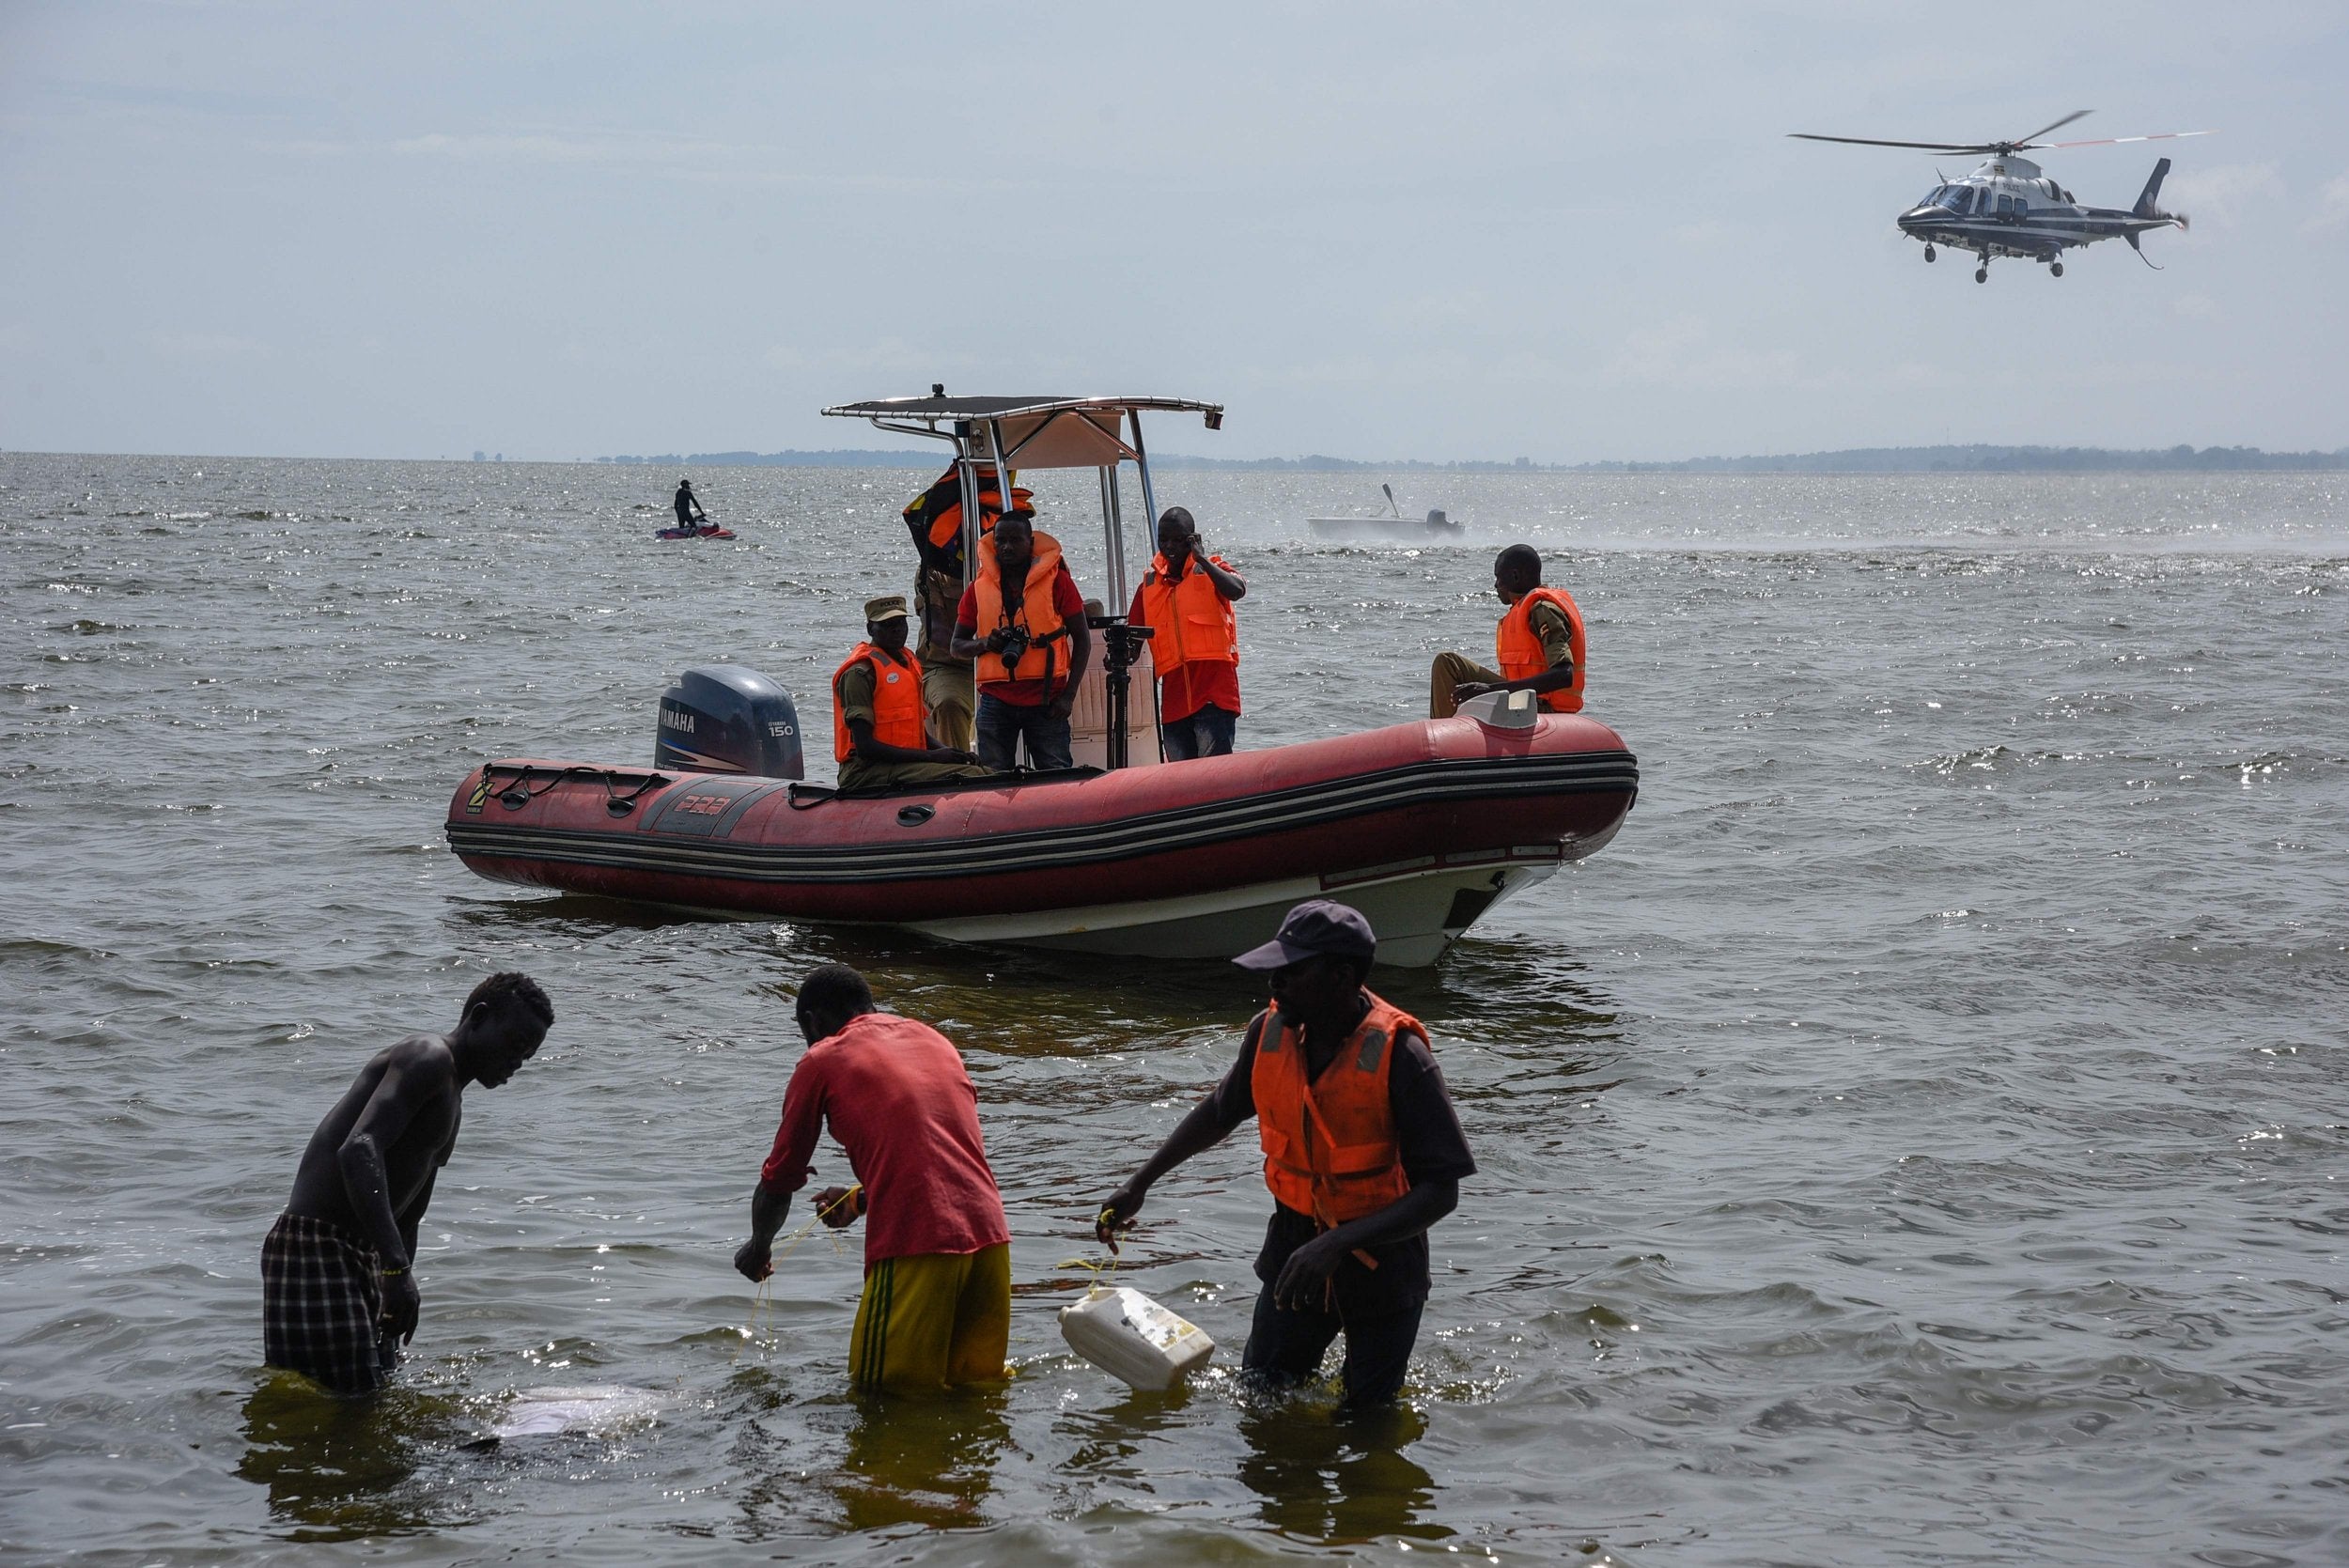 Pleasure Boat Sinks On Lake Victoria In Uganda Leaving At